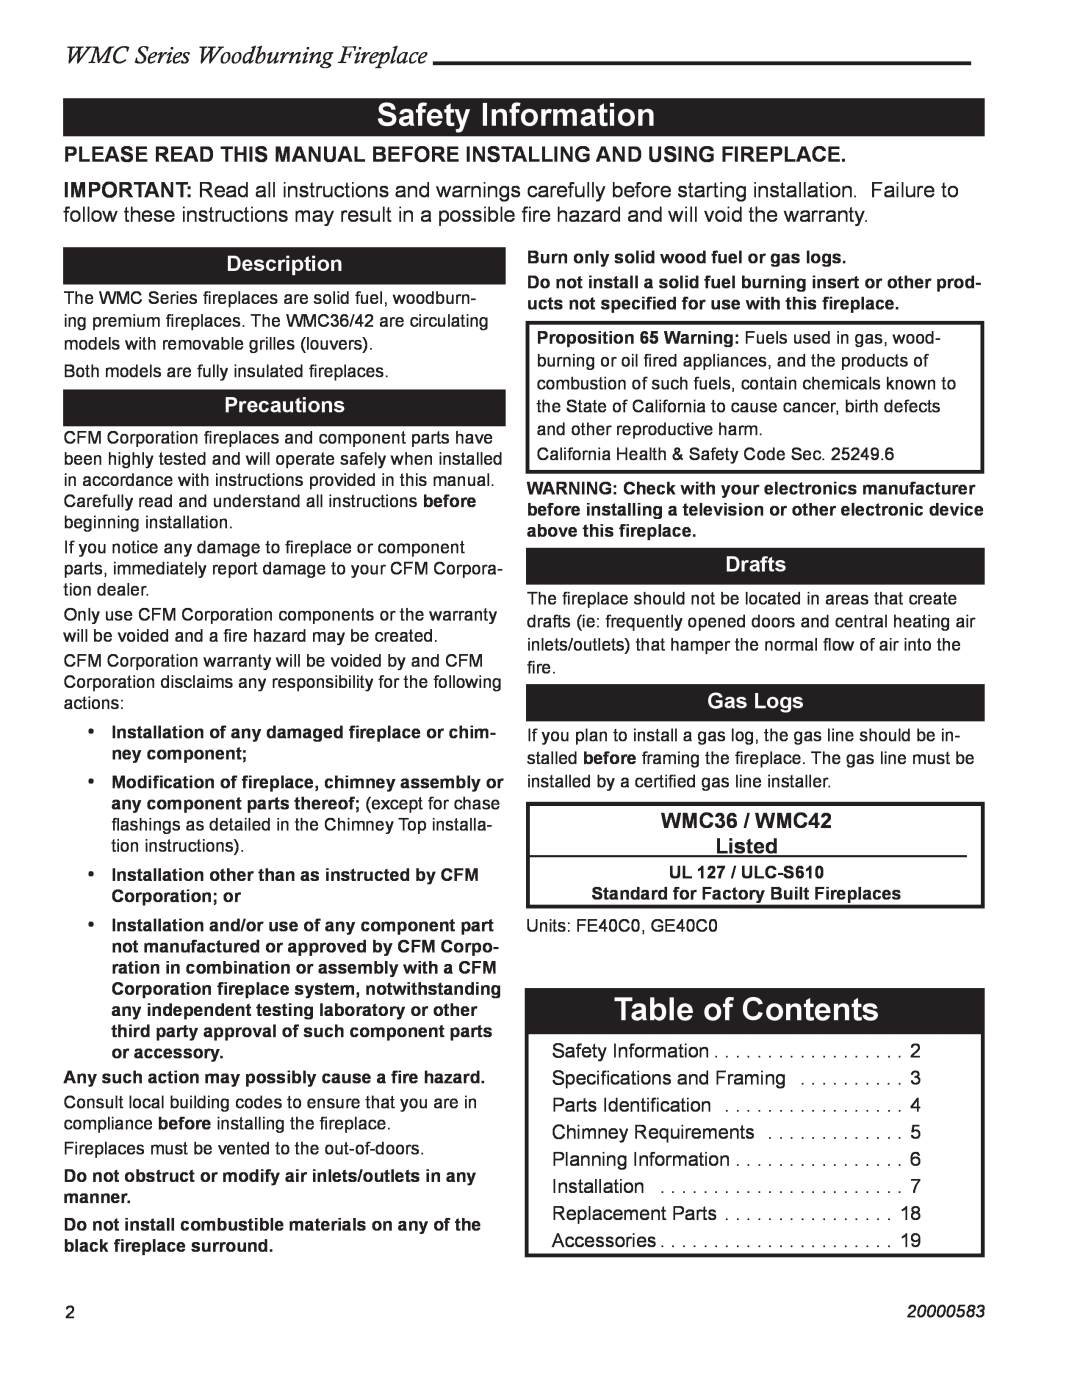 CFM Corporation WMC36 WMC42 Safety Information, Table of Contents, WMC Series Woodburning Fireplace, Description, Drafts 